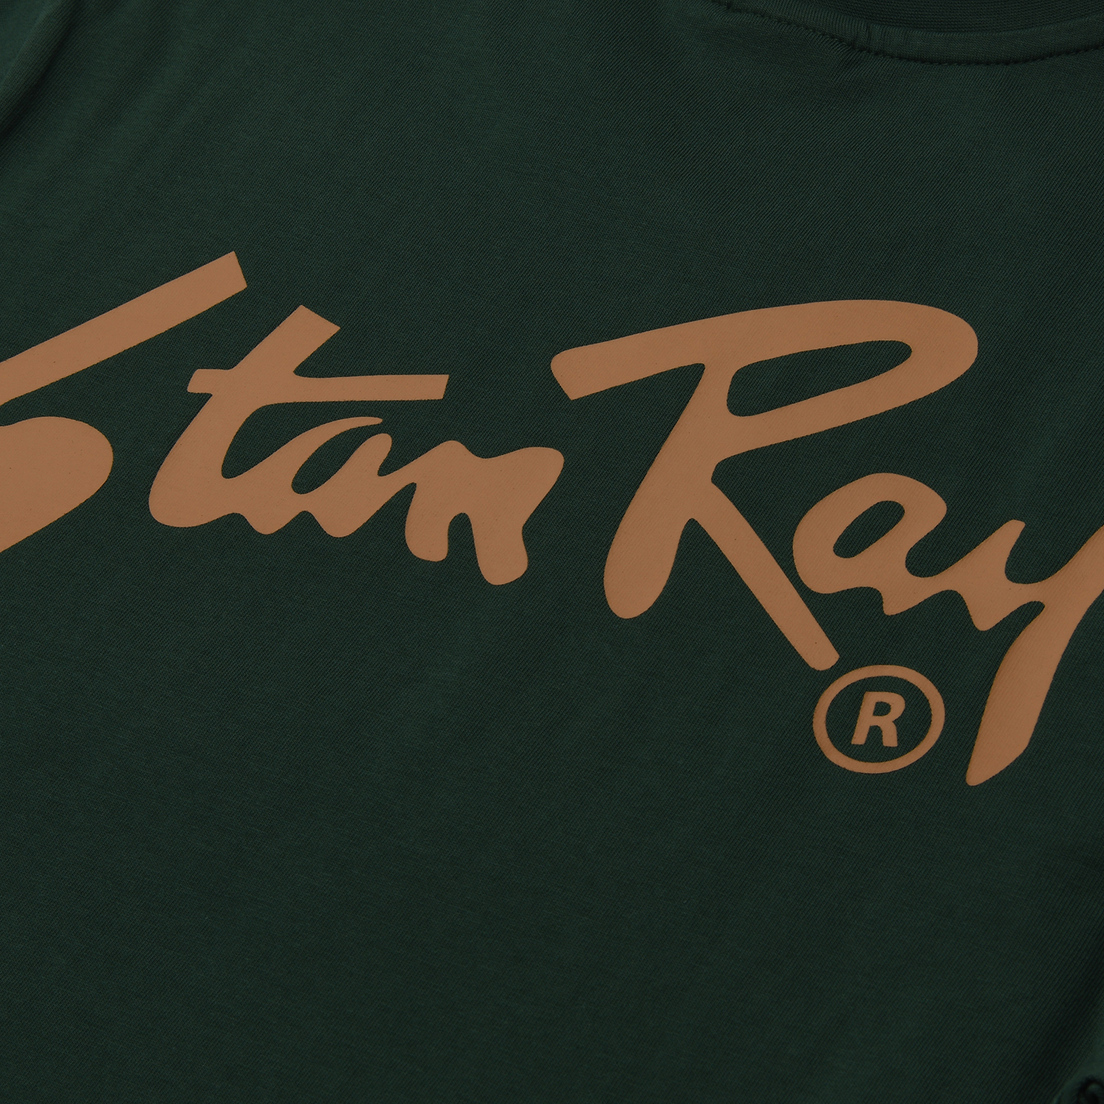 Stan Ray Мужская футболка Stan